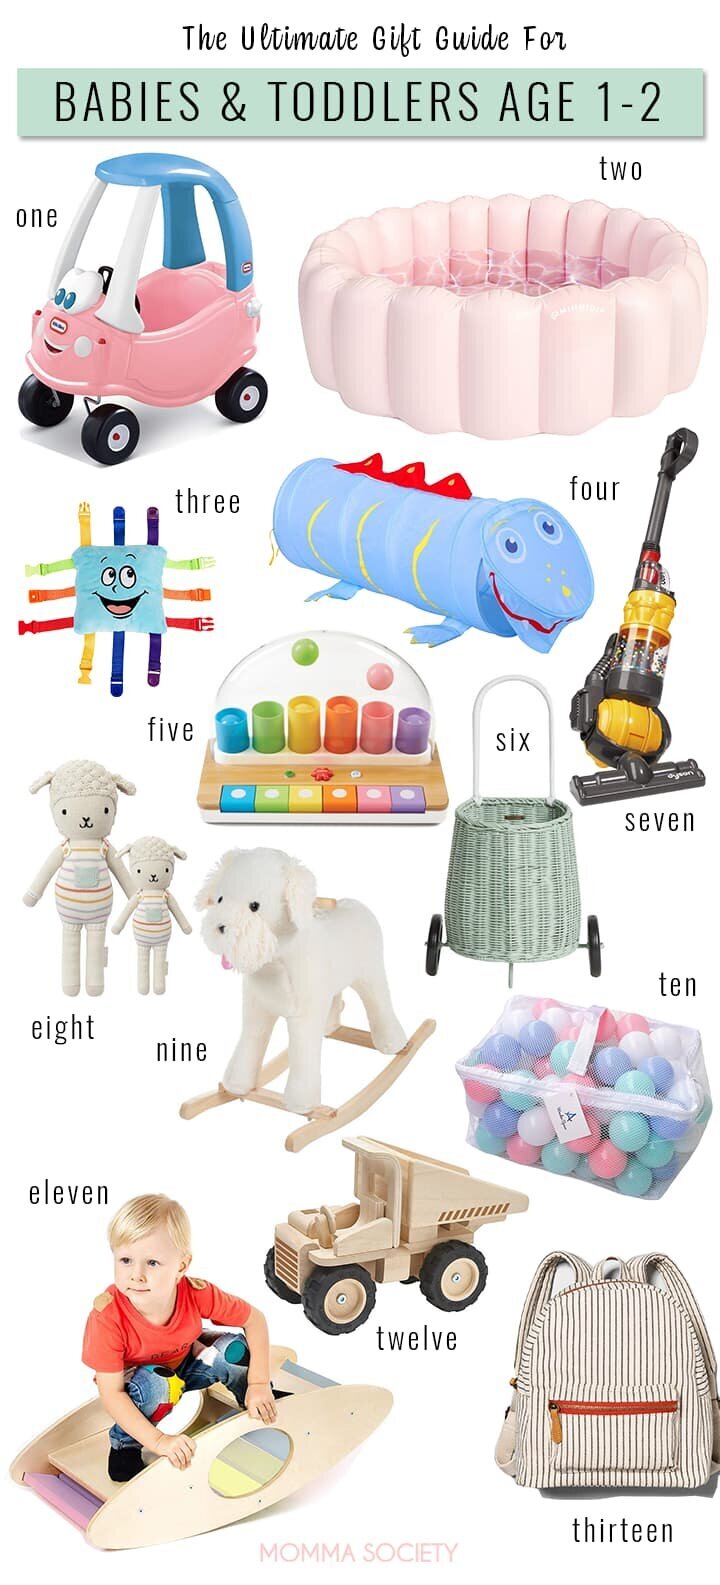 Christmas gift ideas for kids age 3-5 - Adele Jennings - Irish Mirror Online